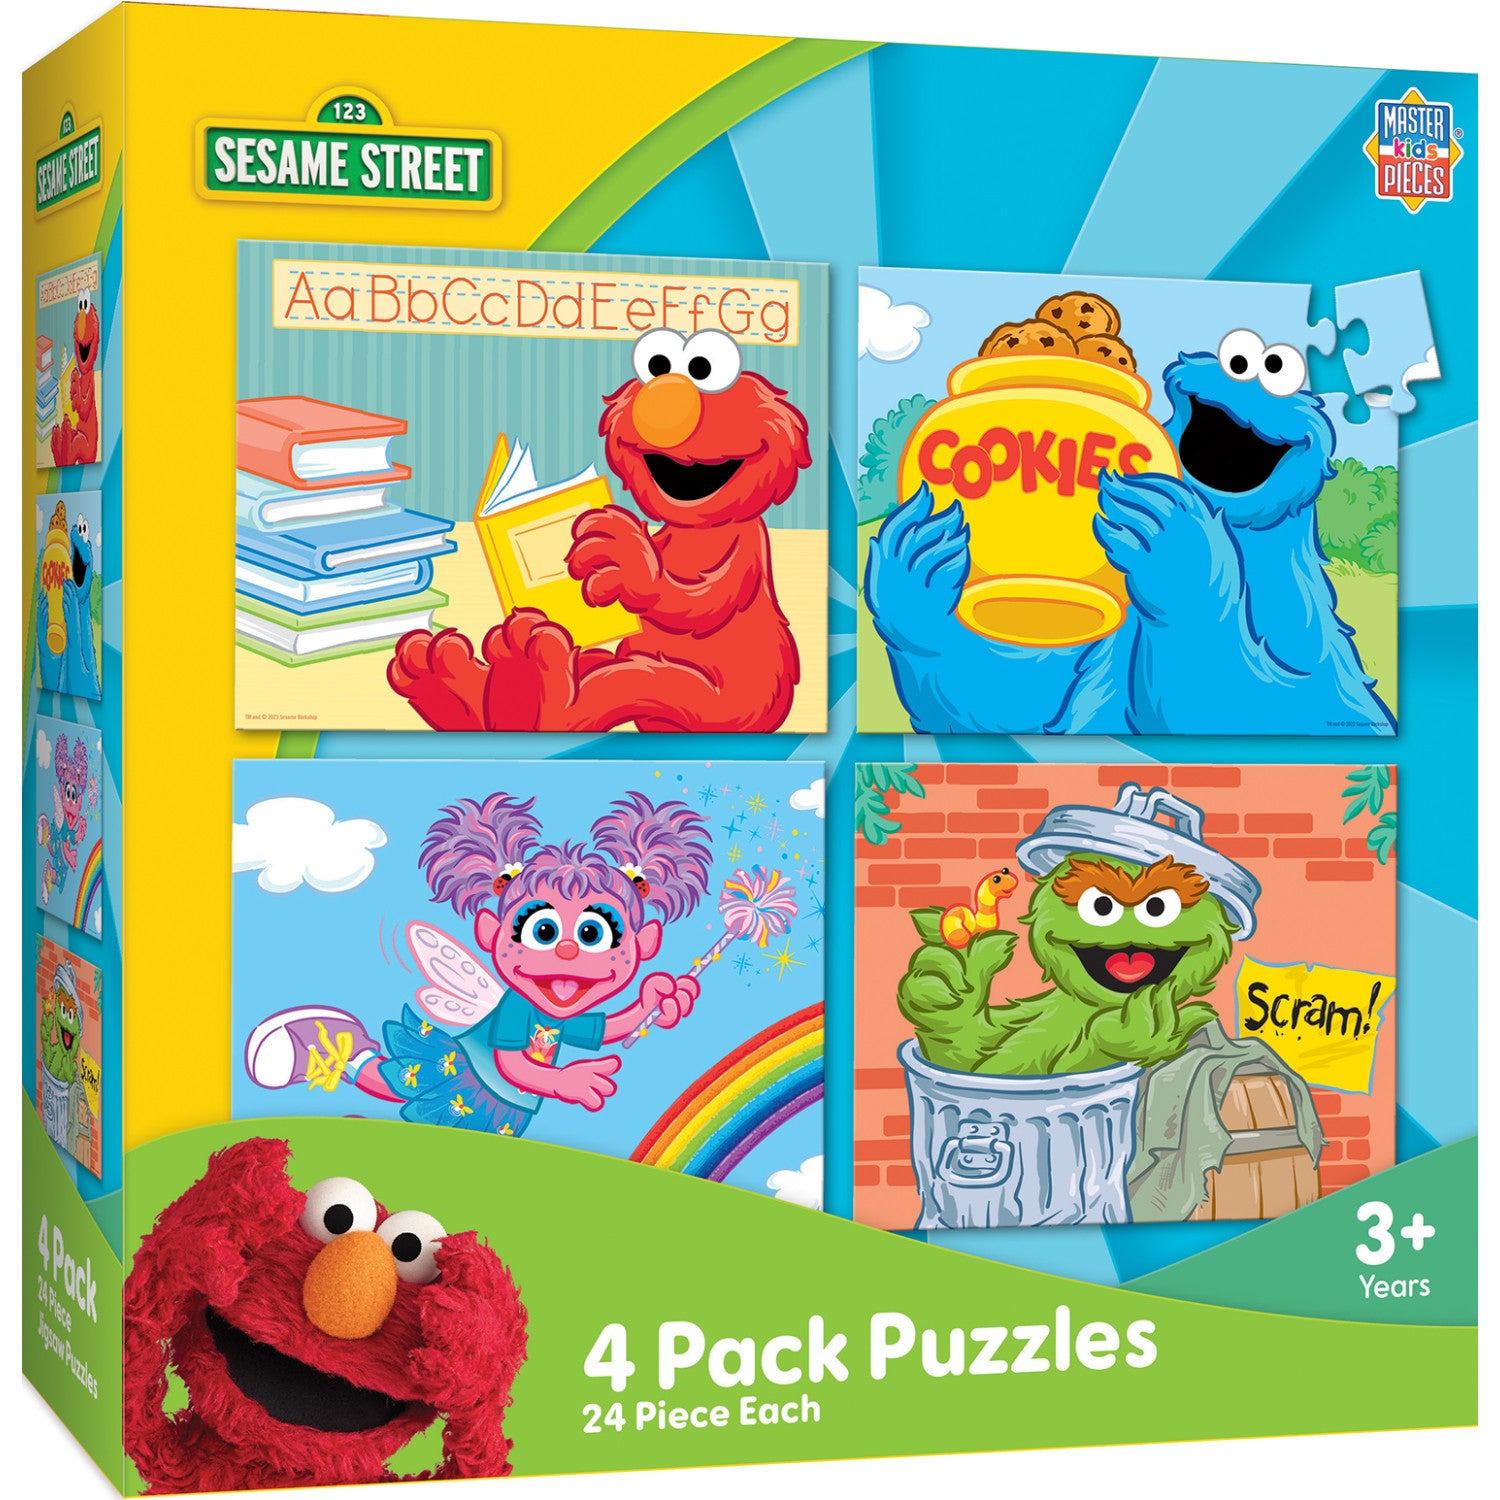 Sesame Street 24 Piece Jigsaw Puzzles 4-Pack